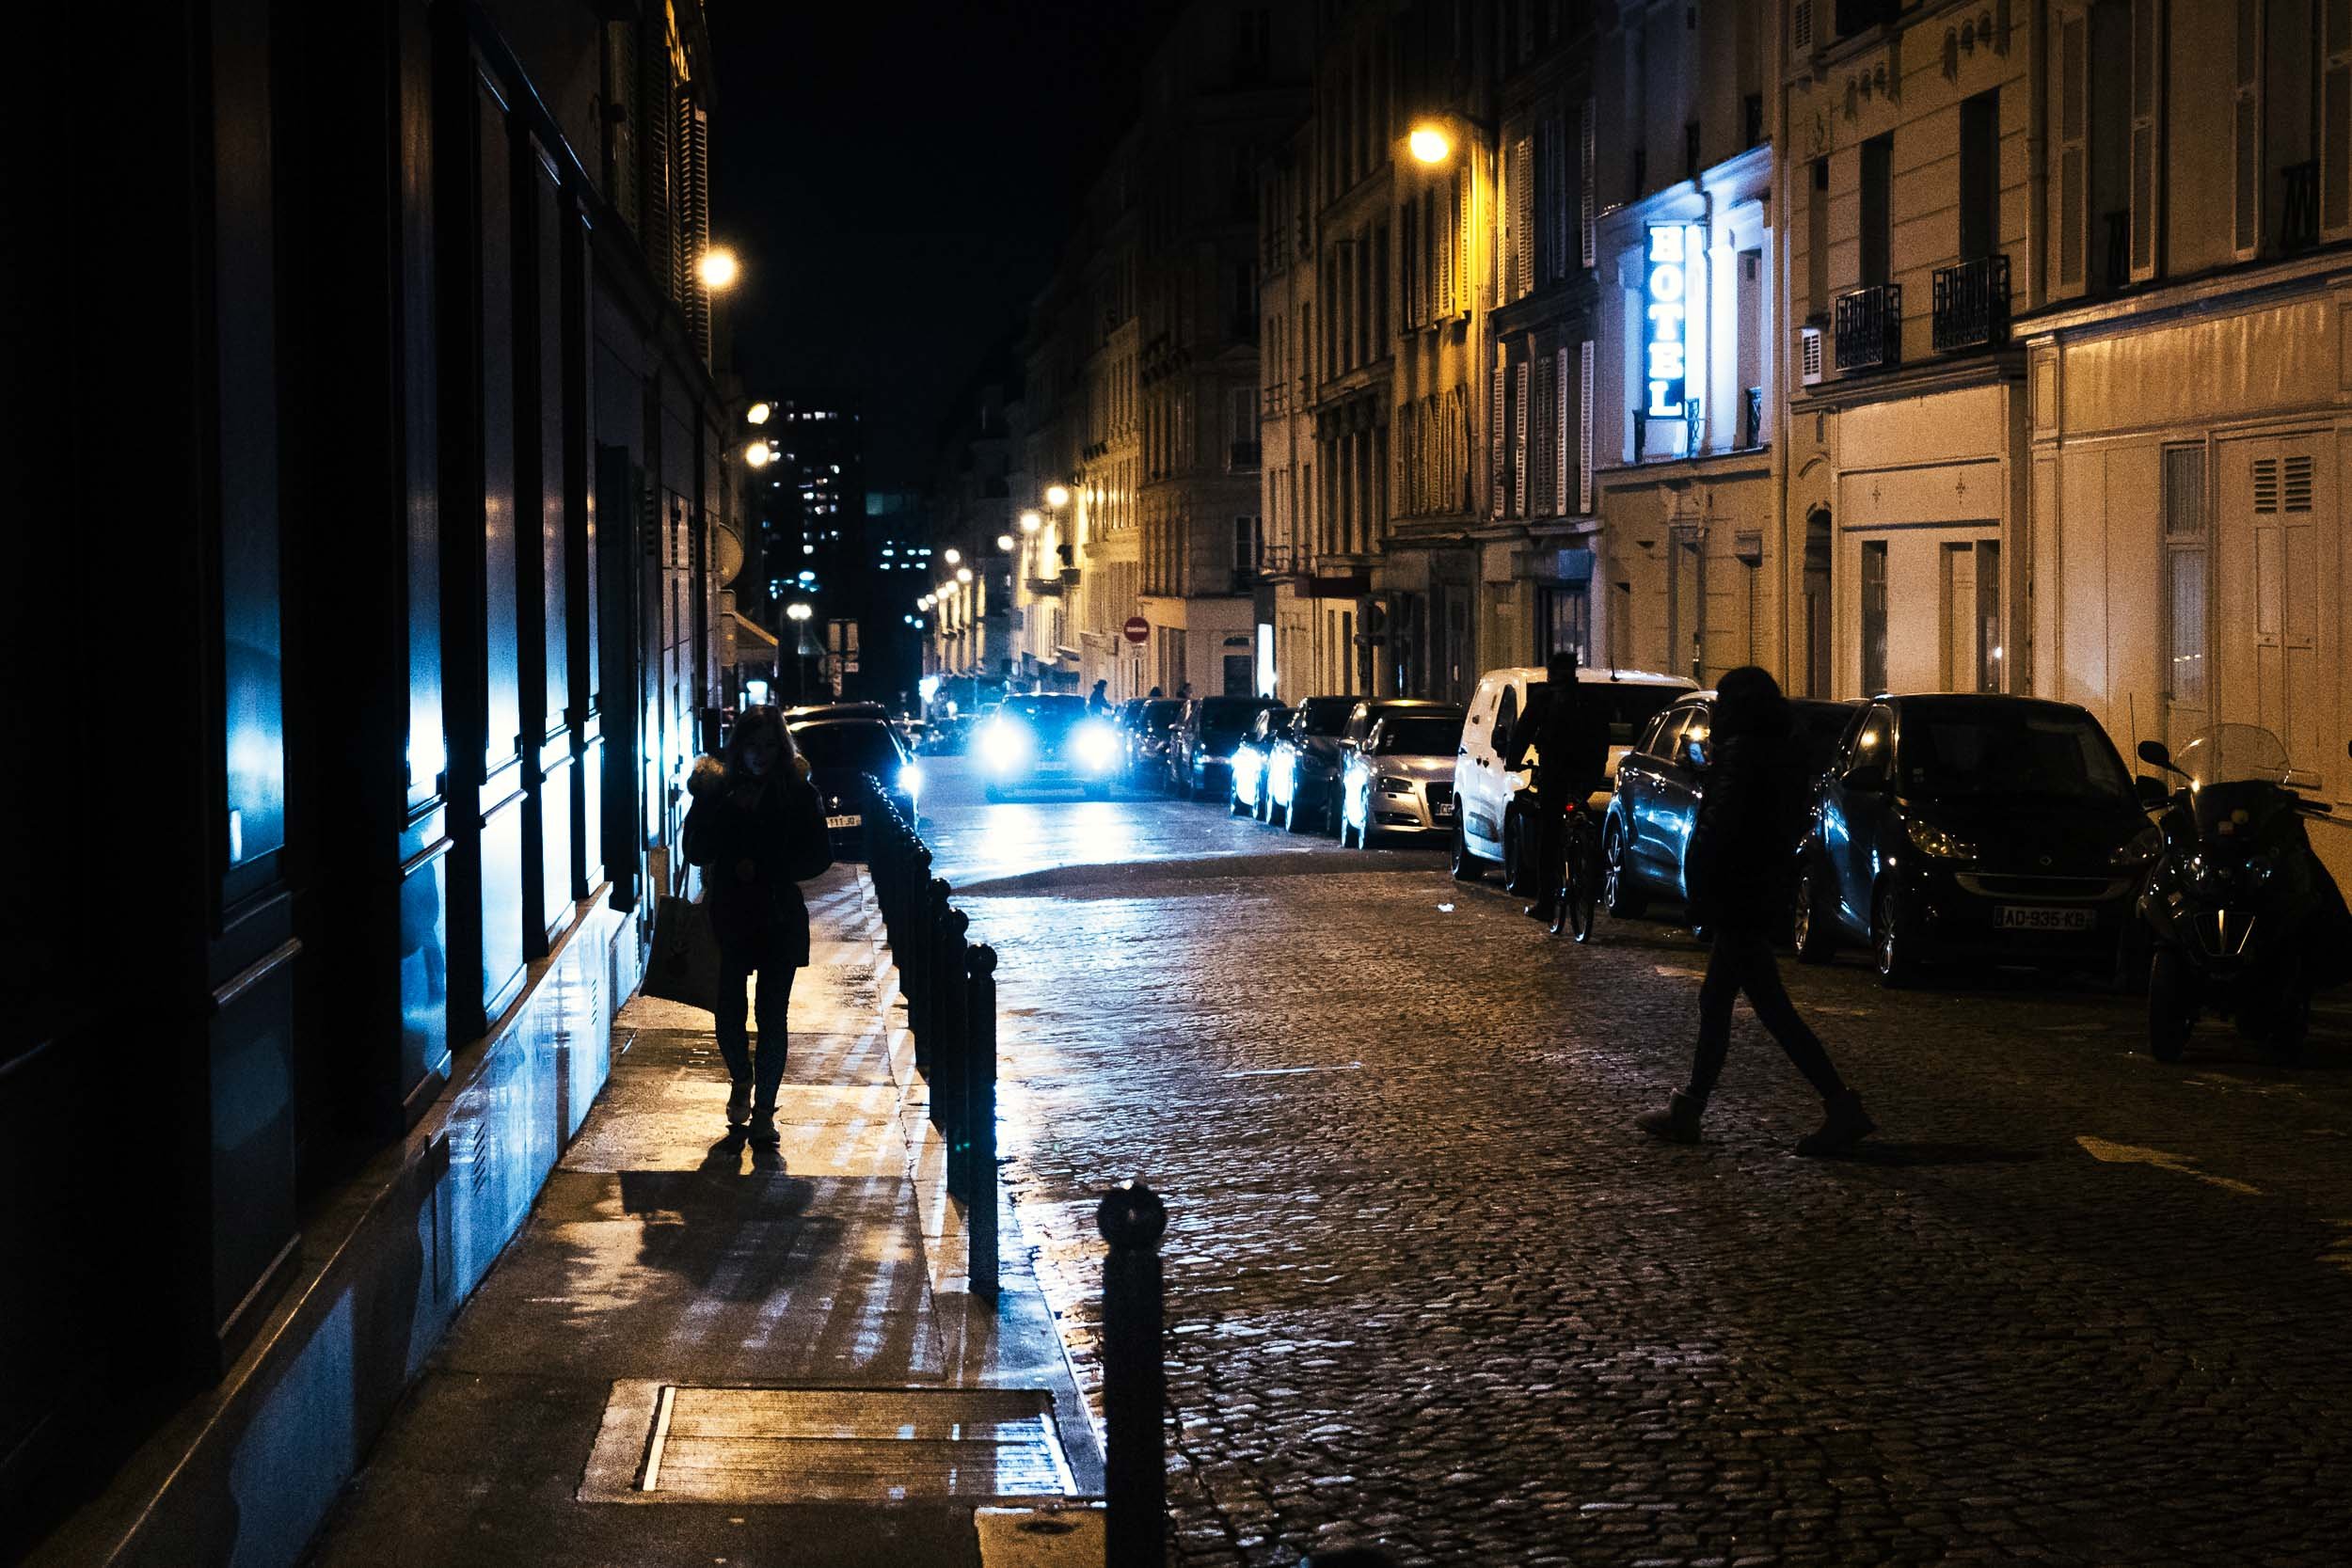 021-nightscene-street-paris.jpg